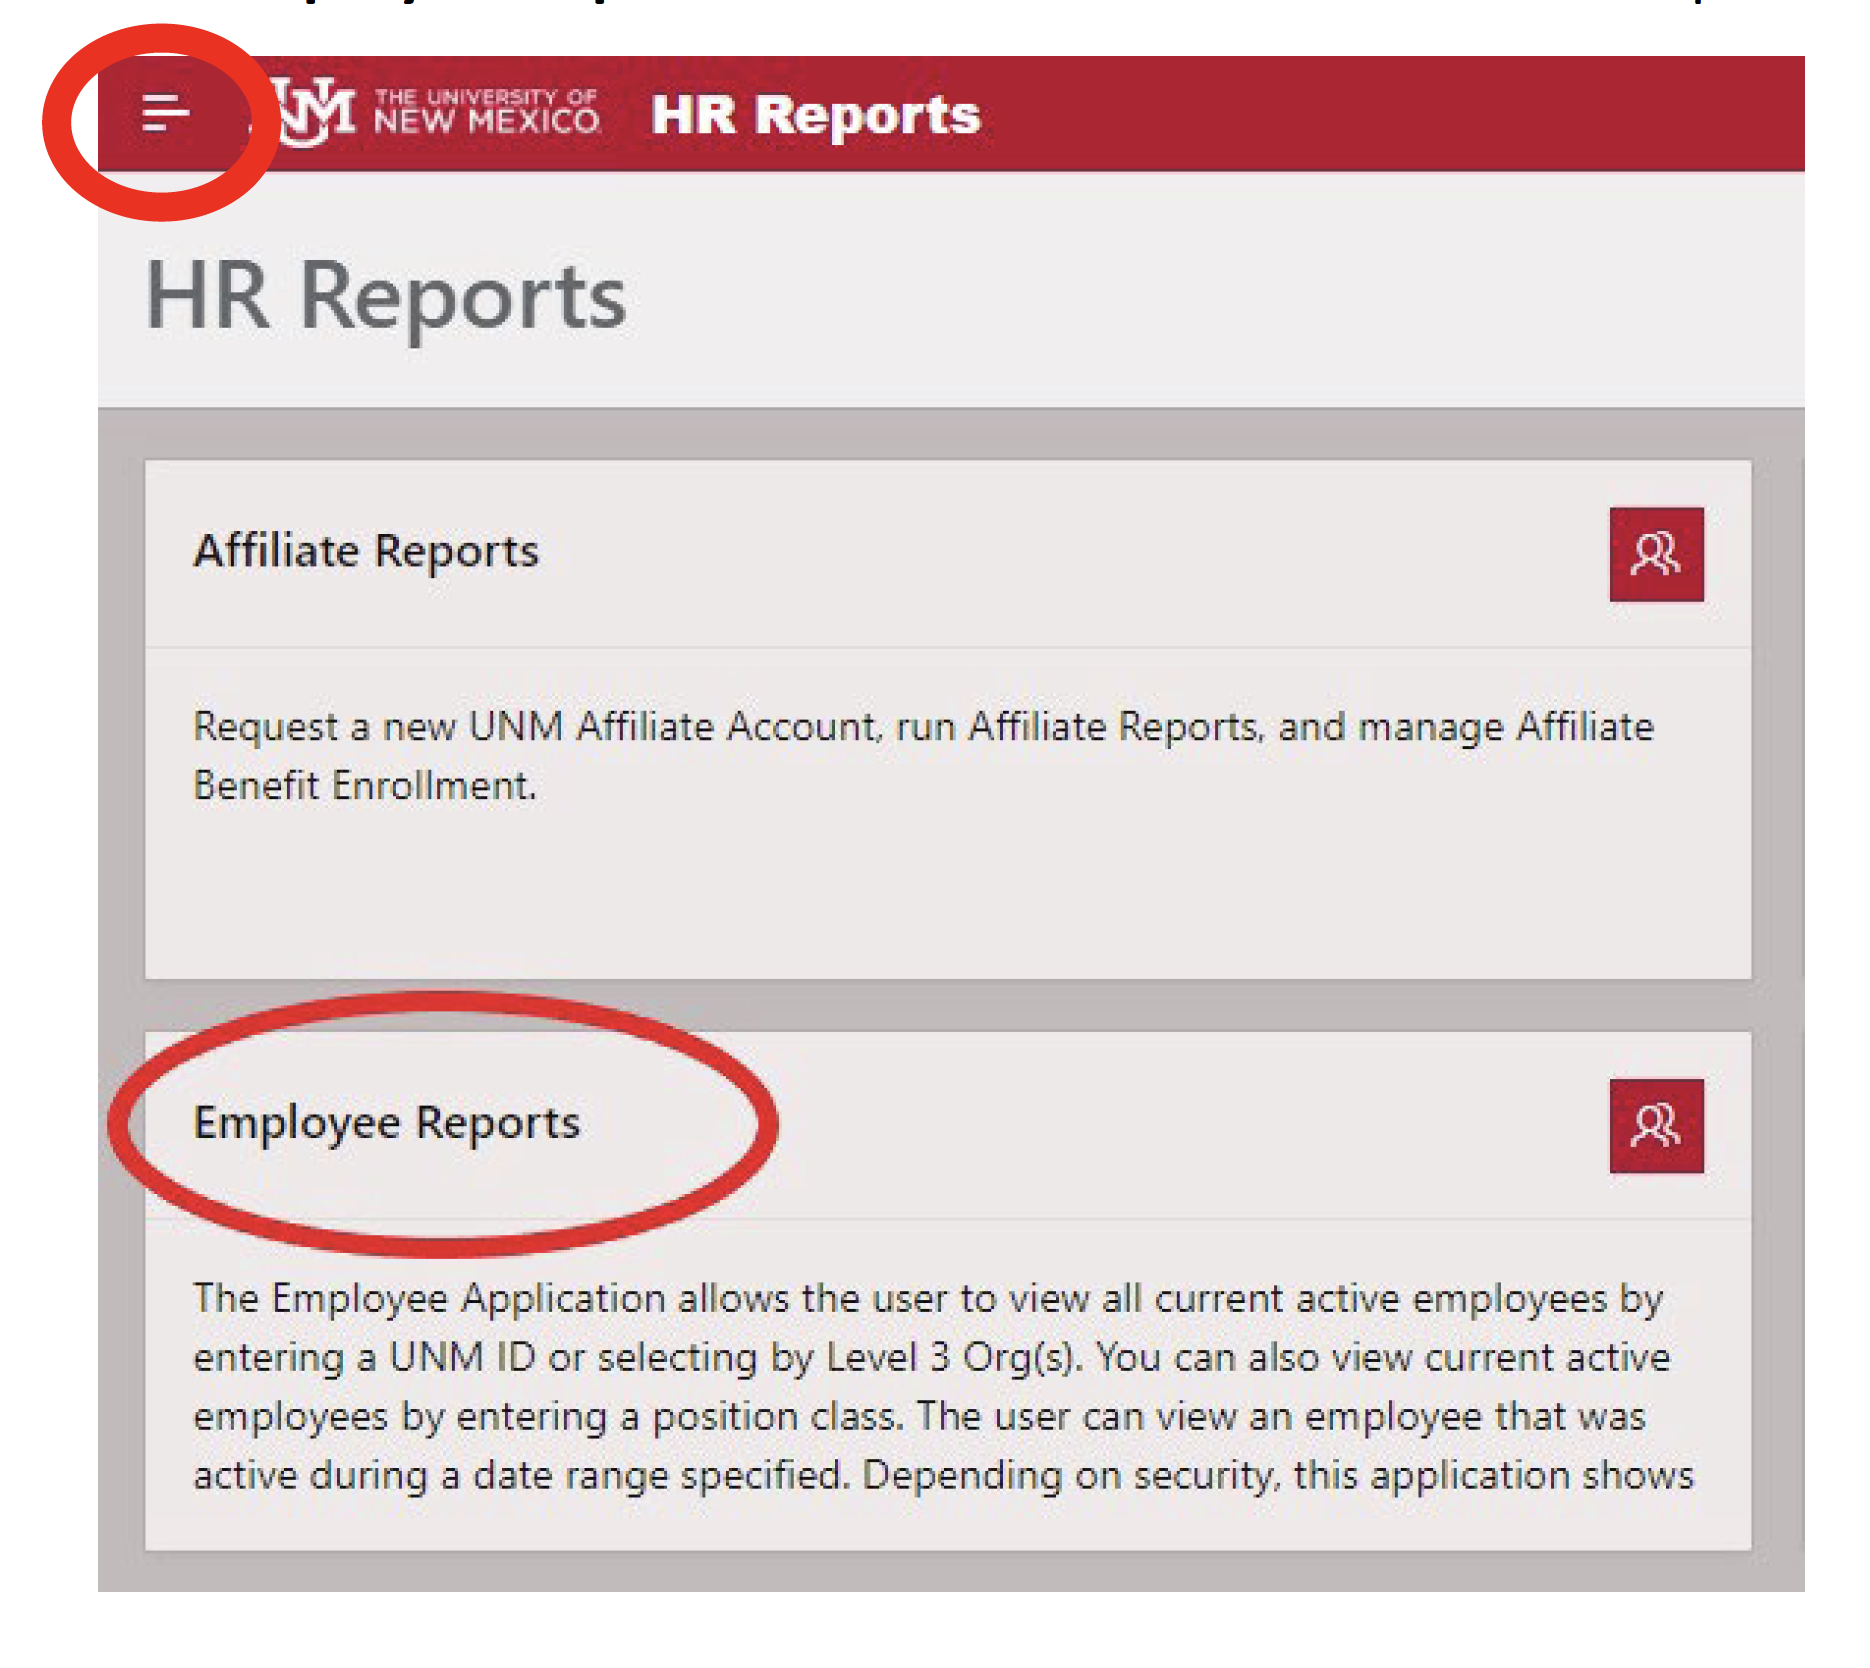 Employee Reports